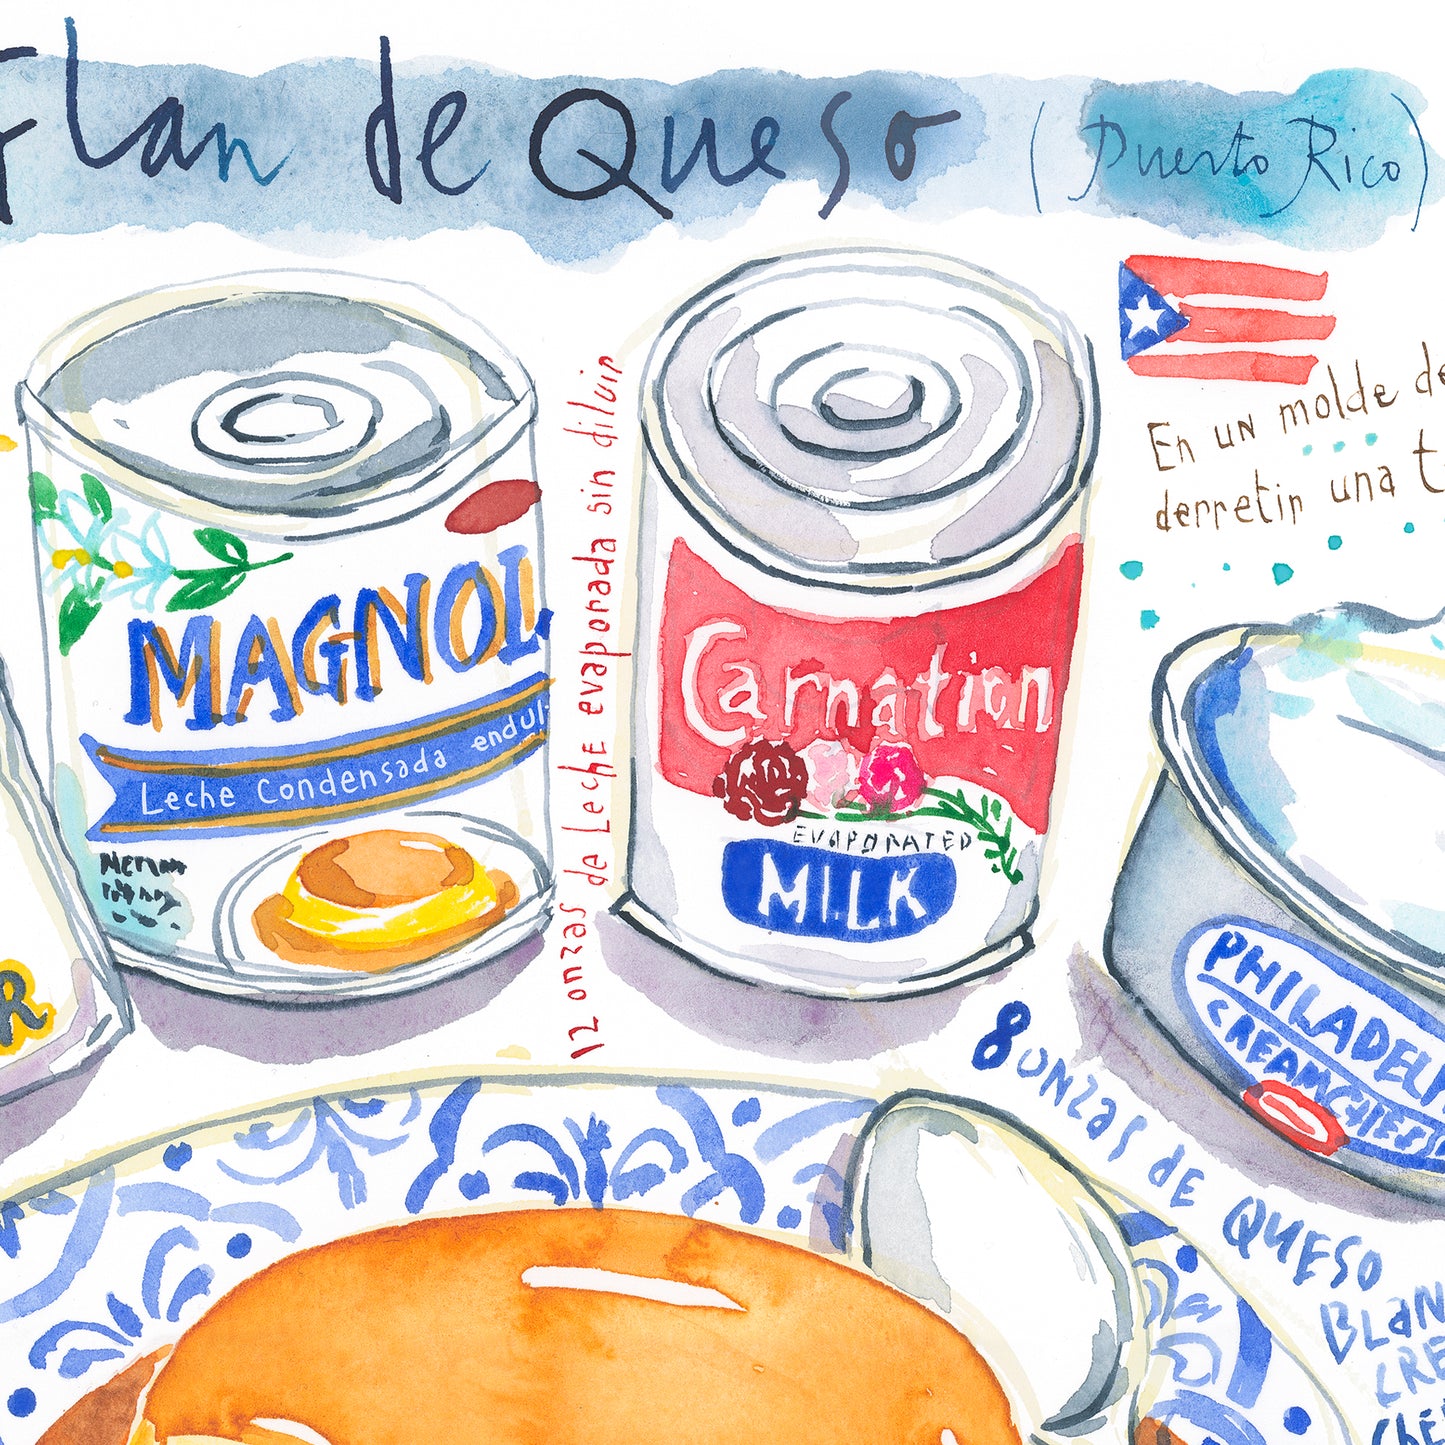 Flan de Queso recipe from Puerto Rico